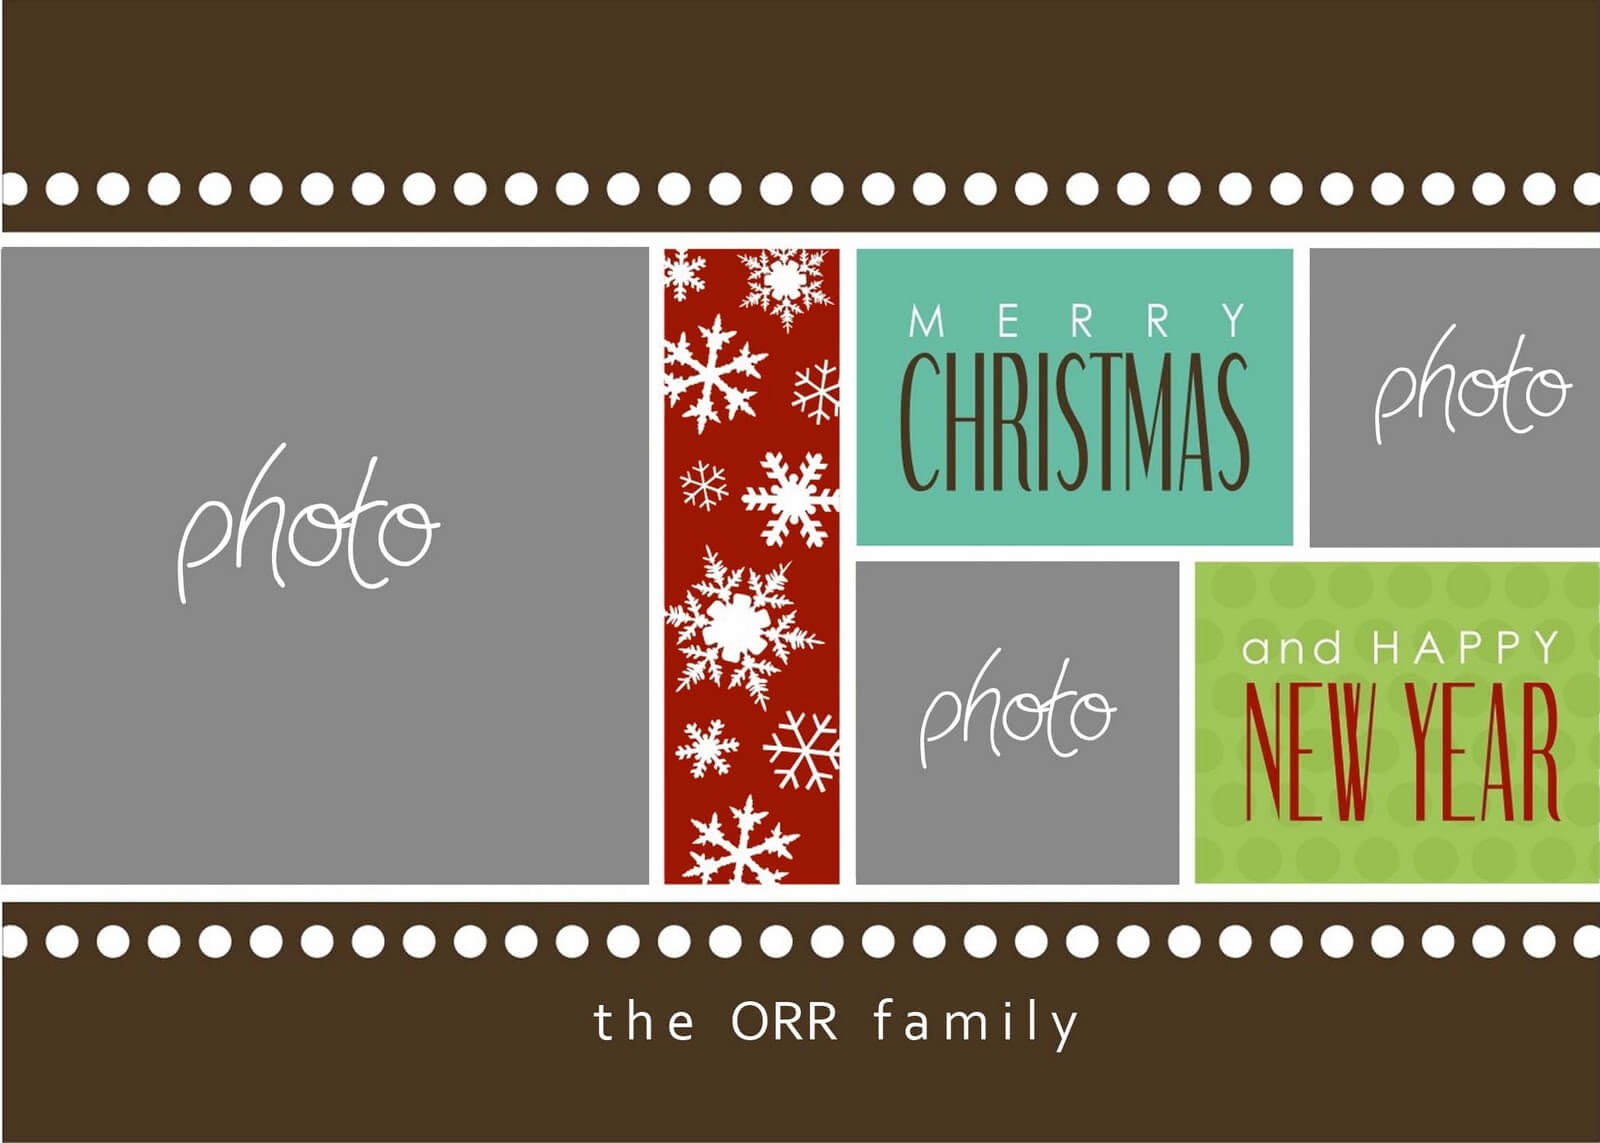 8 Free Photoshop Christmas Card Templates Images – Photoshop With Regard To Christmas Photo Card Templates Photoshop